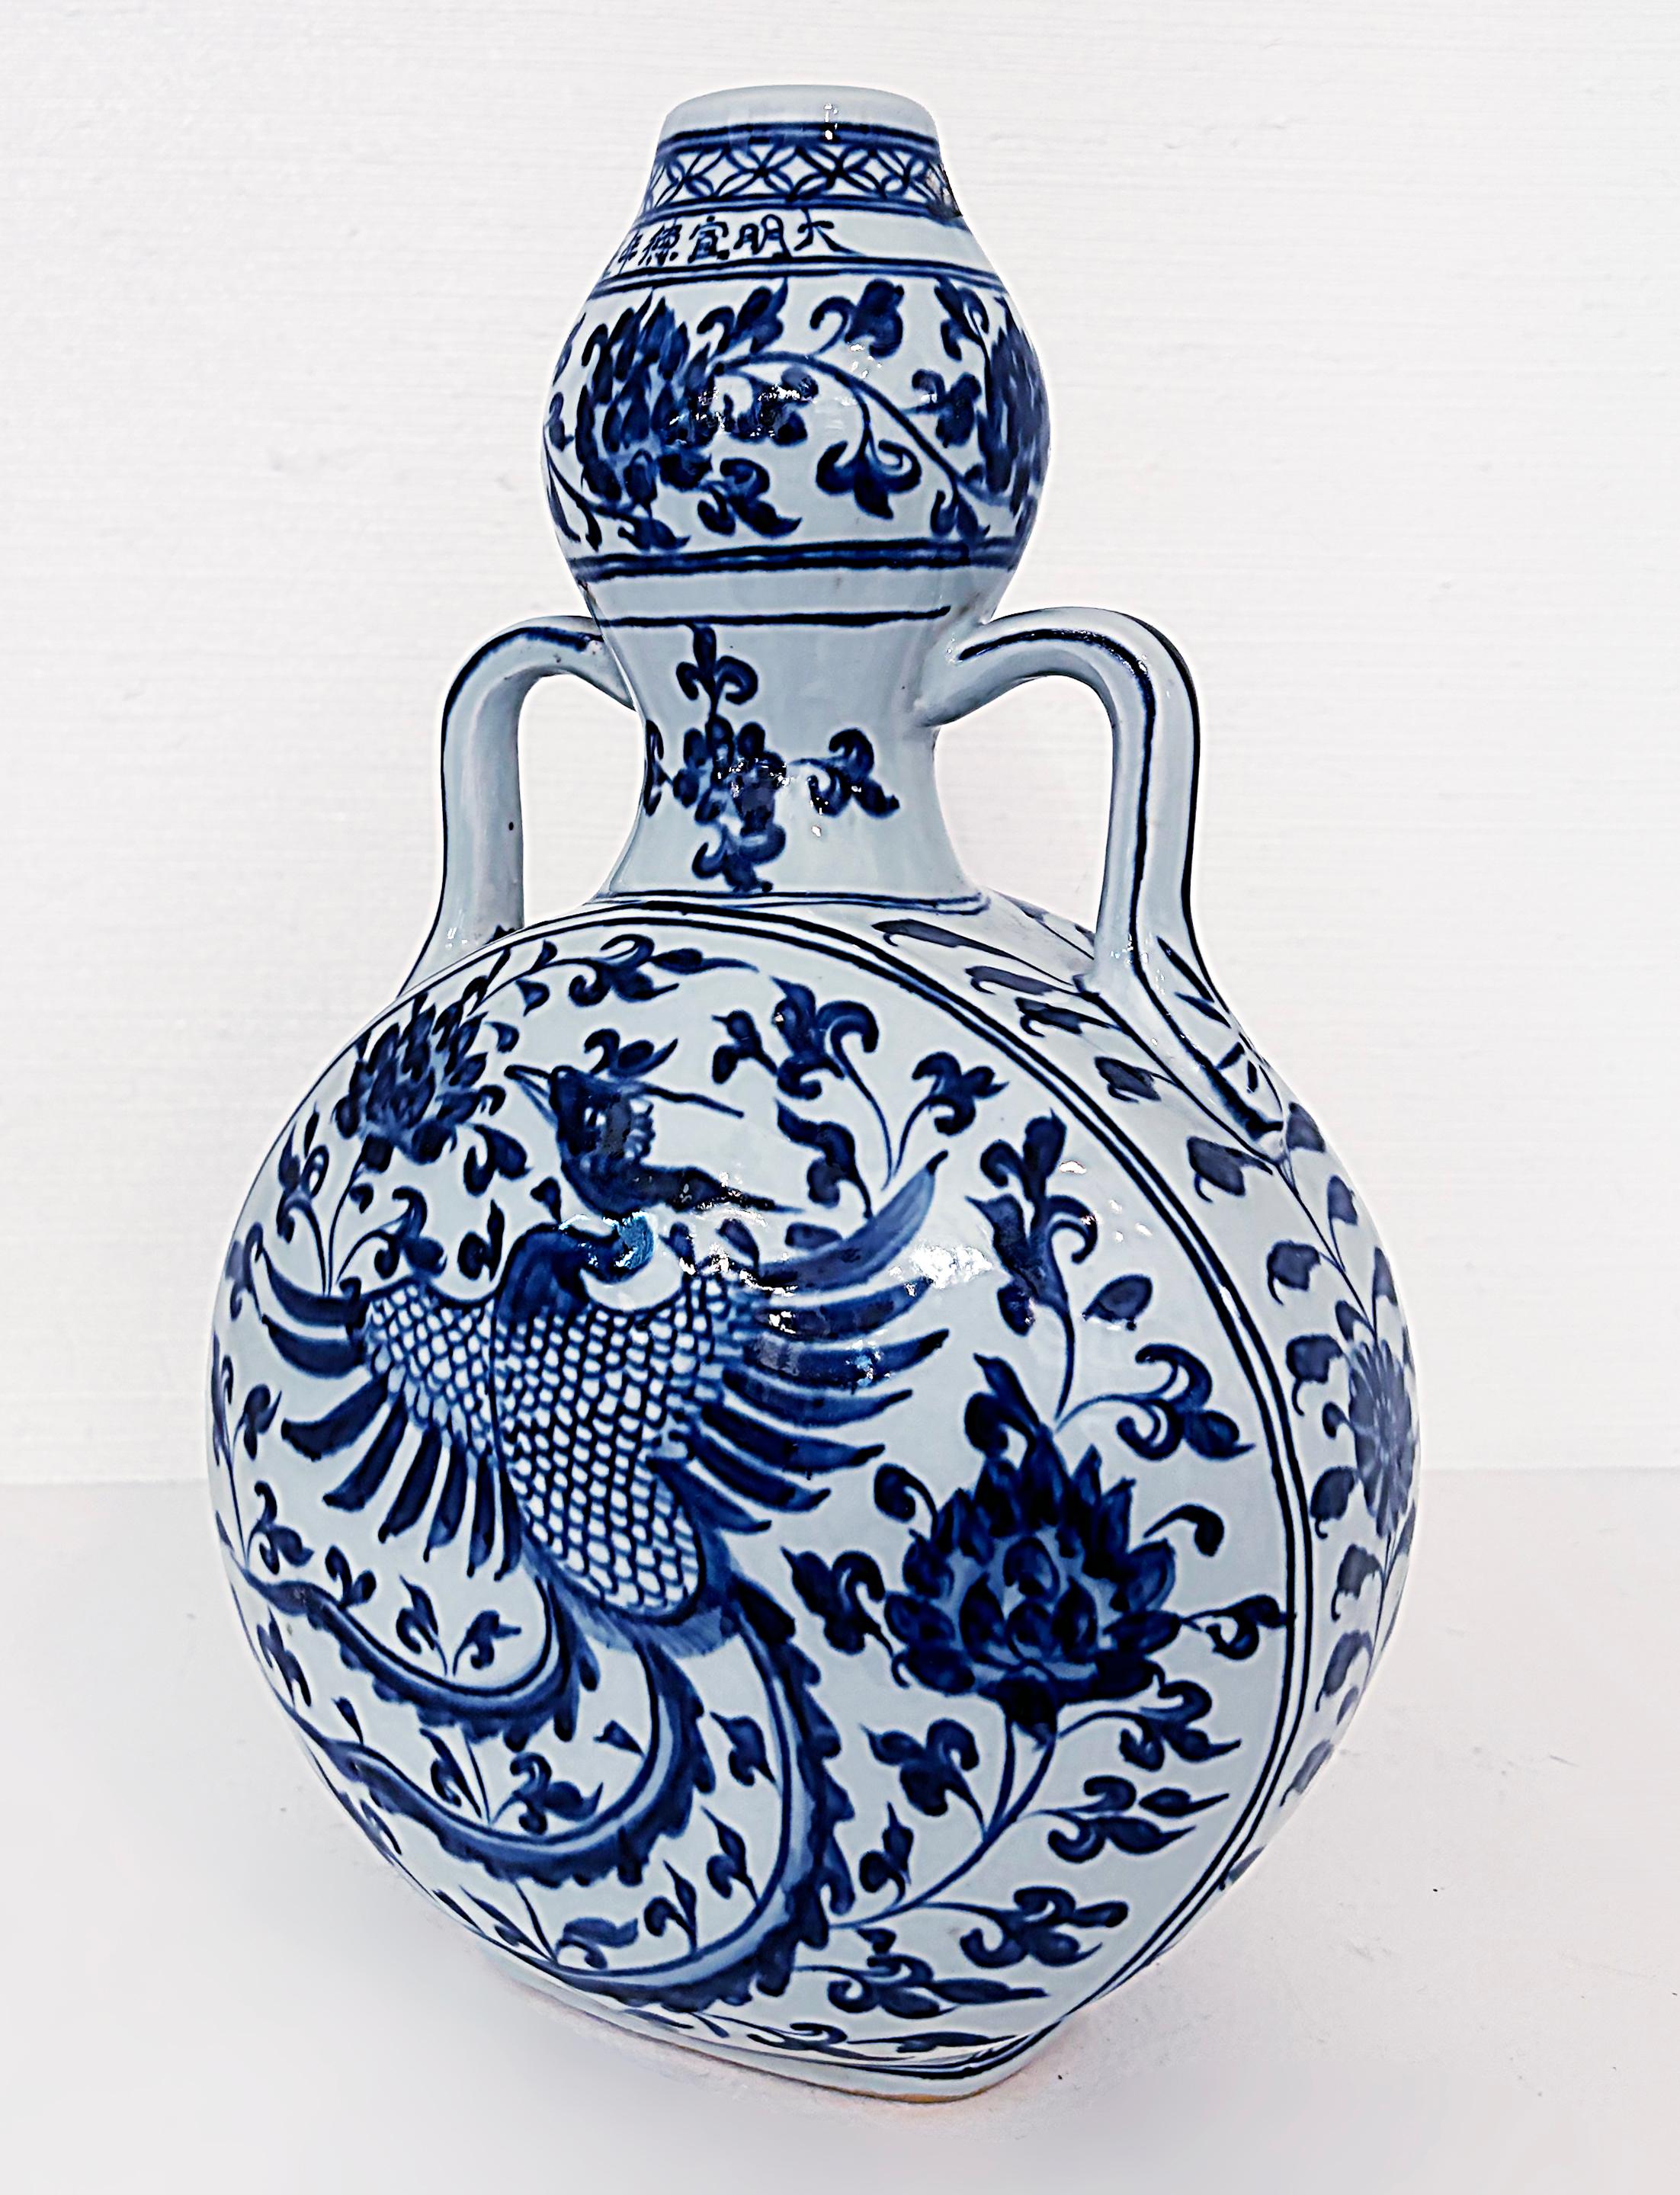 Glazed Chinese Blue and White Porcelain Phoenix Bird Vase with Handles